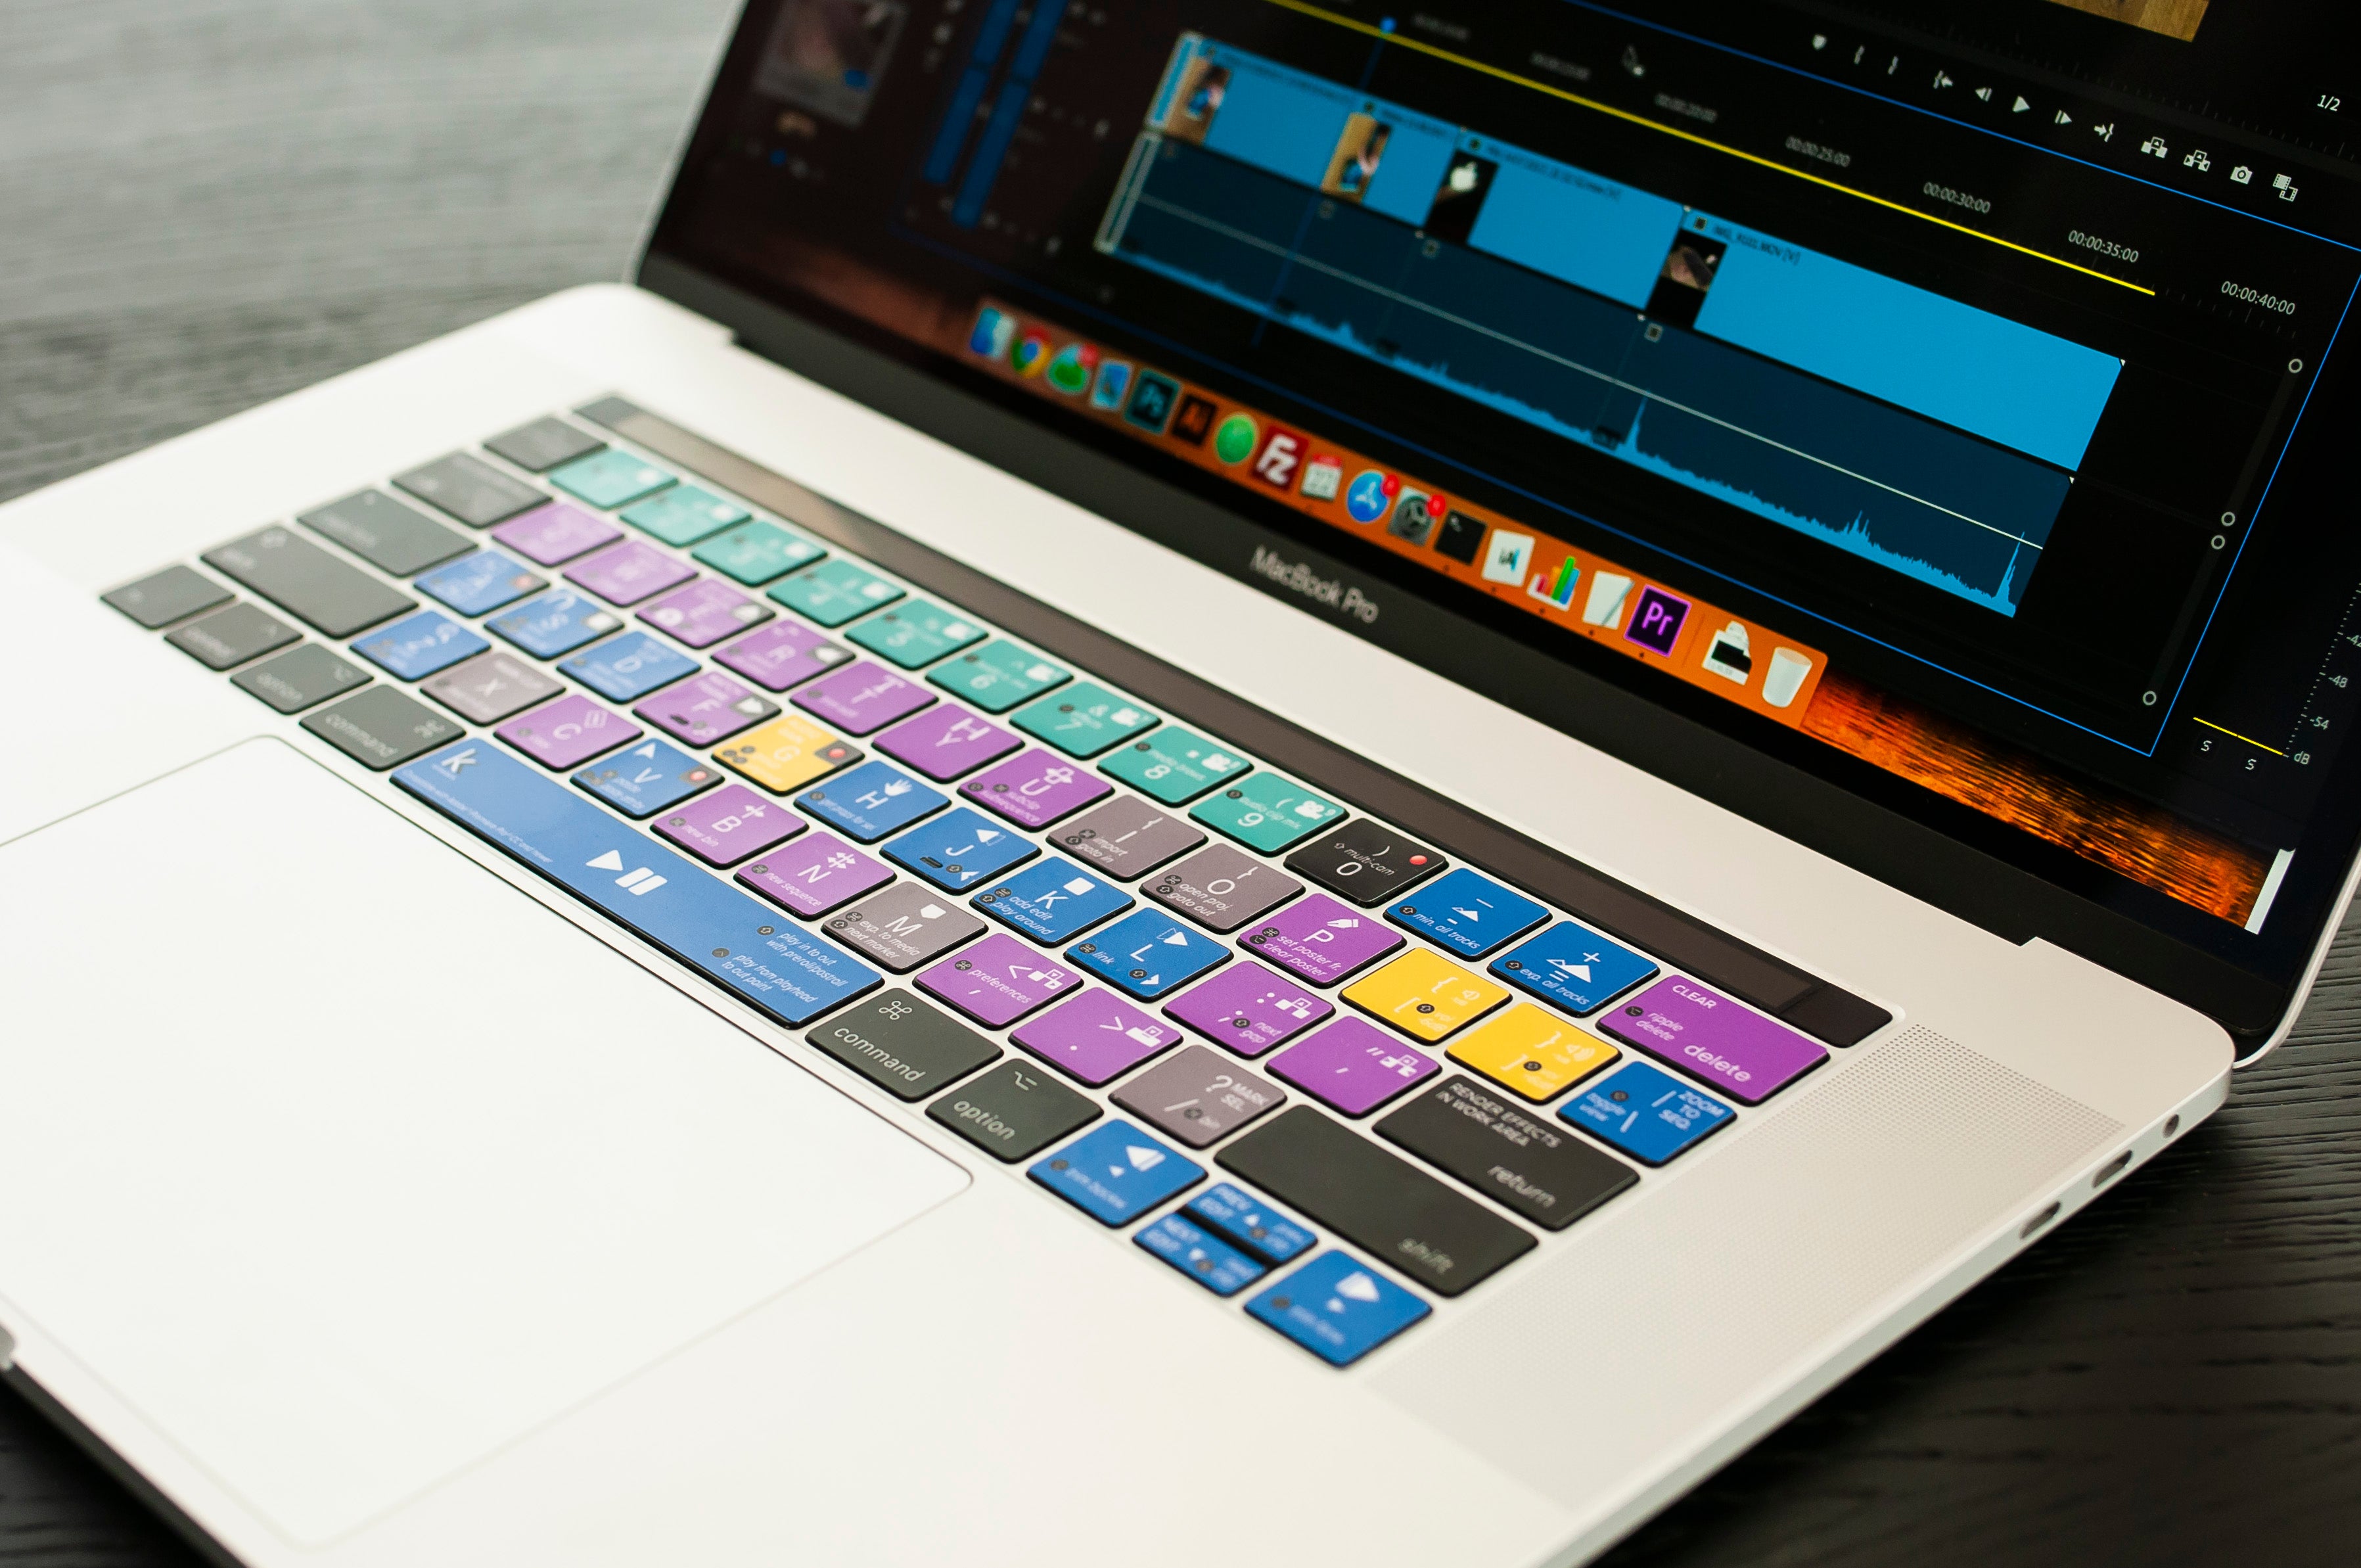 pro tools shortcuts keyboard stickers